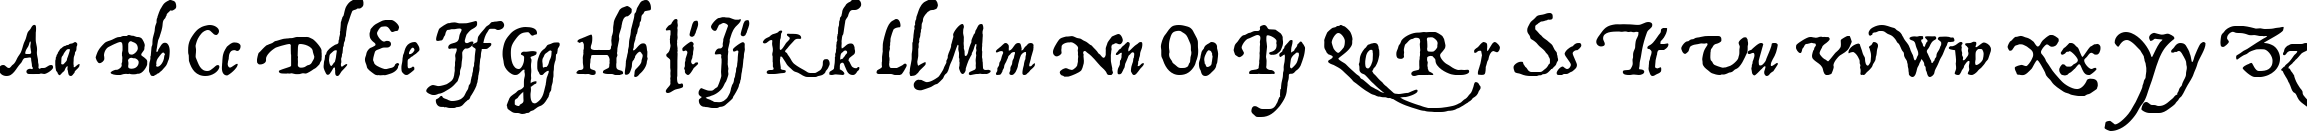 Пример написания английского алфавита шрифтом P22 Operina Corsivo